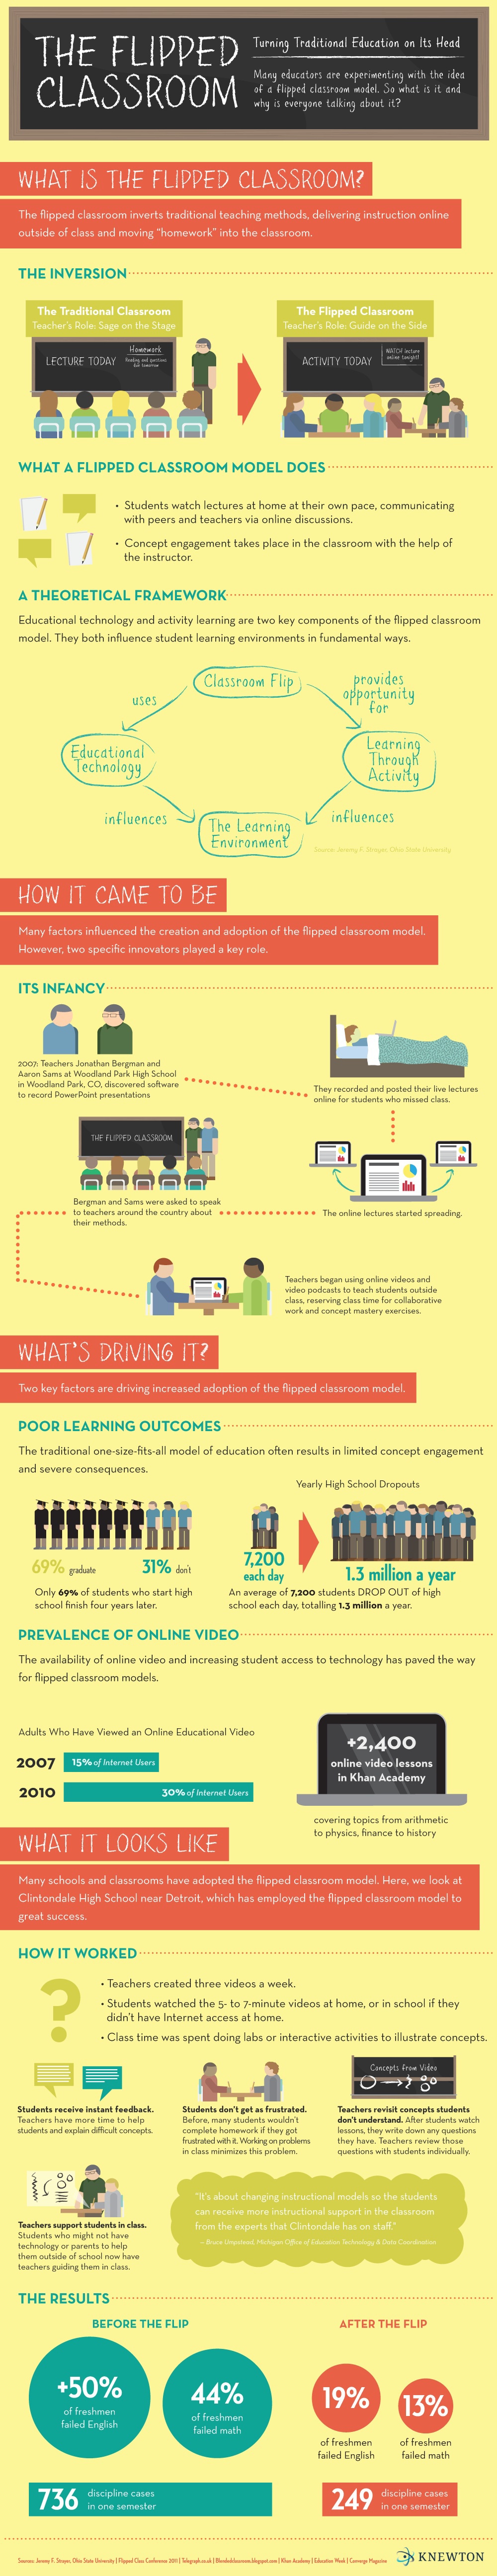 flipped-classroom-education-infographic-knewton